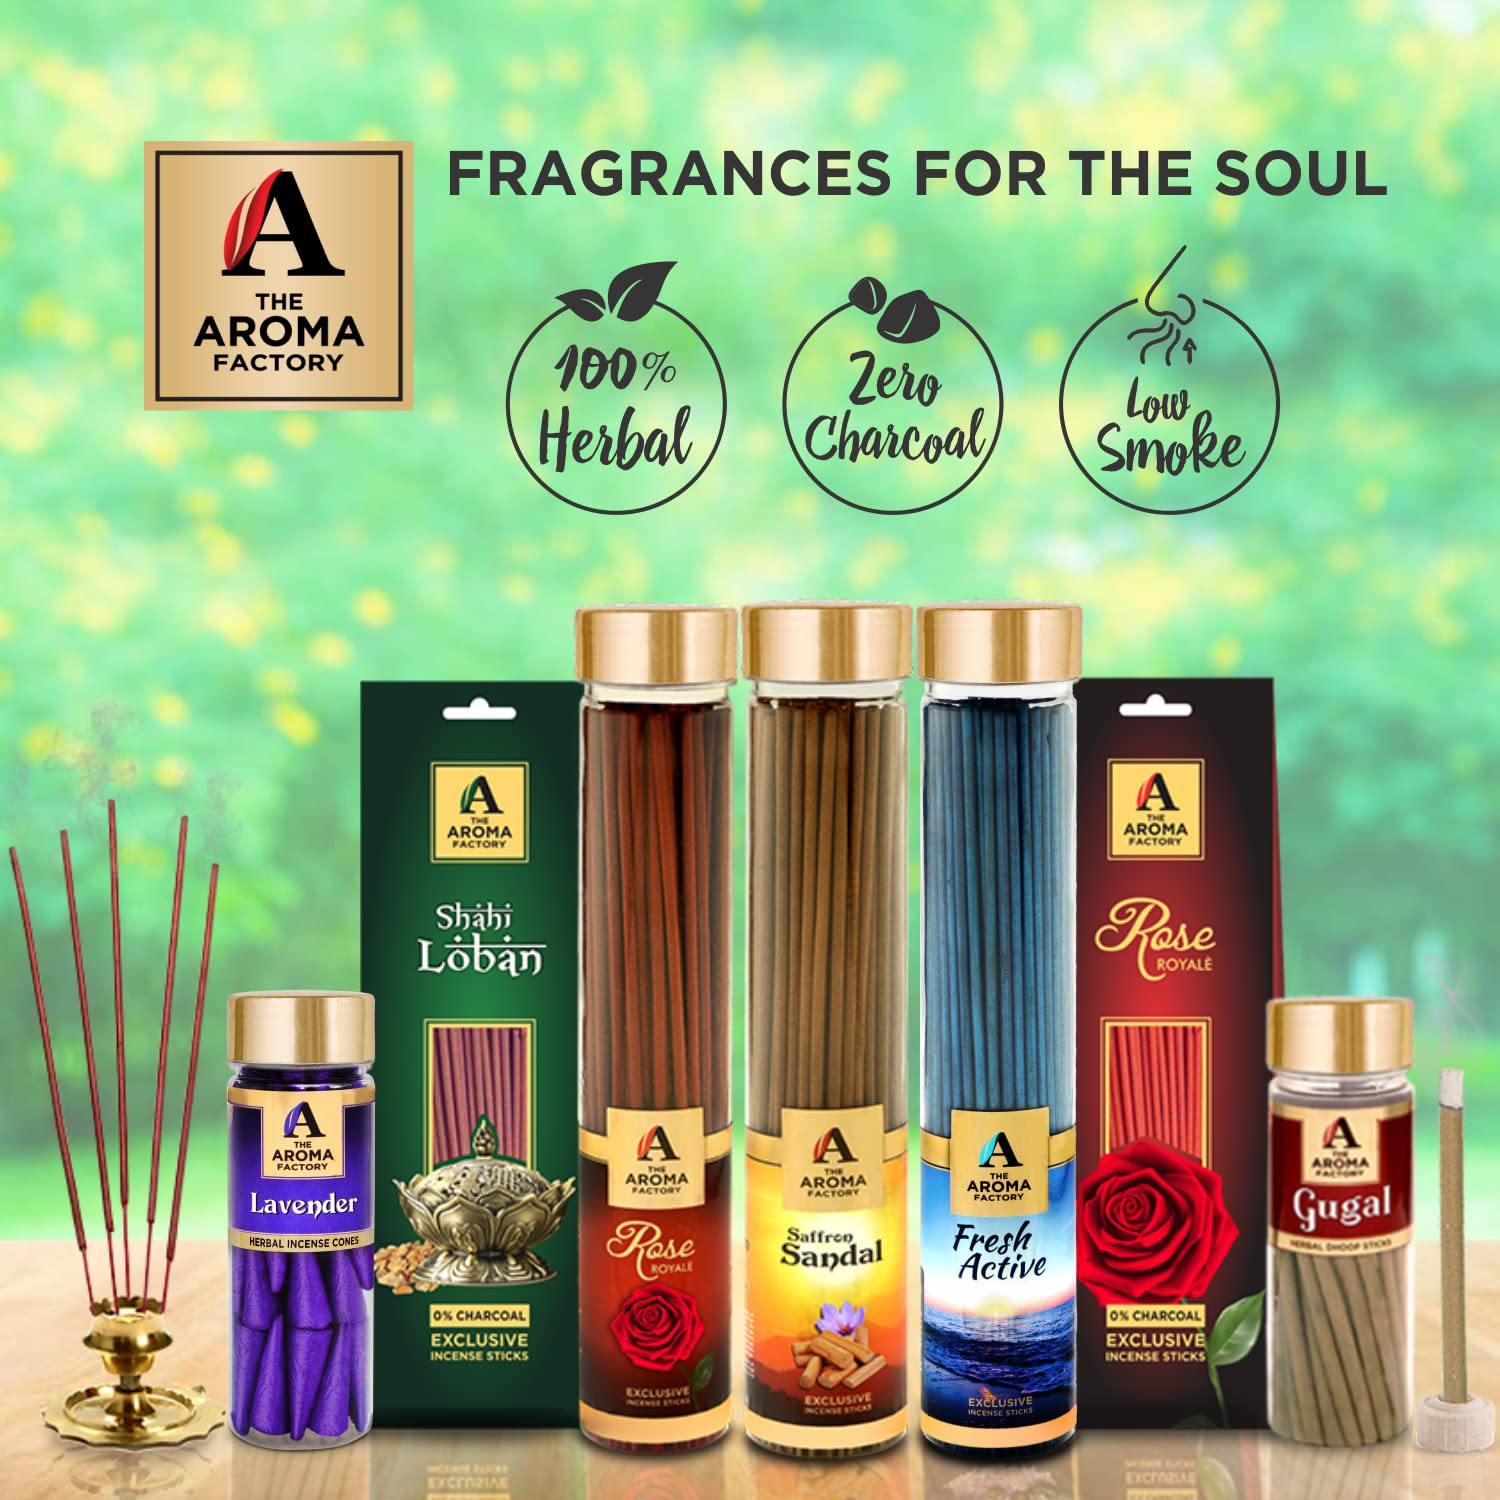 The Aroma Factory Happy Diwali Gift Hamper Set (Swad Mix 25 Candy, Incense Laxmi Agarbatti, Kesar Chanda Dhoopcone, Greeting Card, Jute Bag) Gift Item